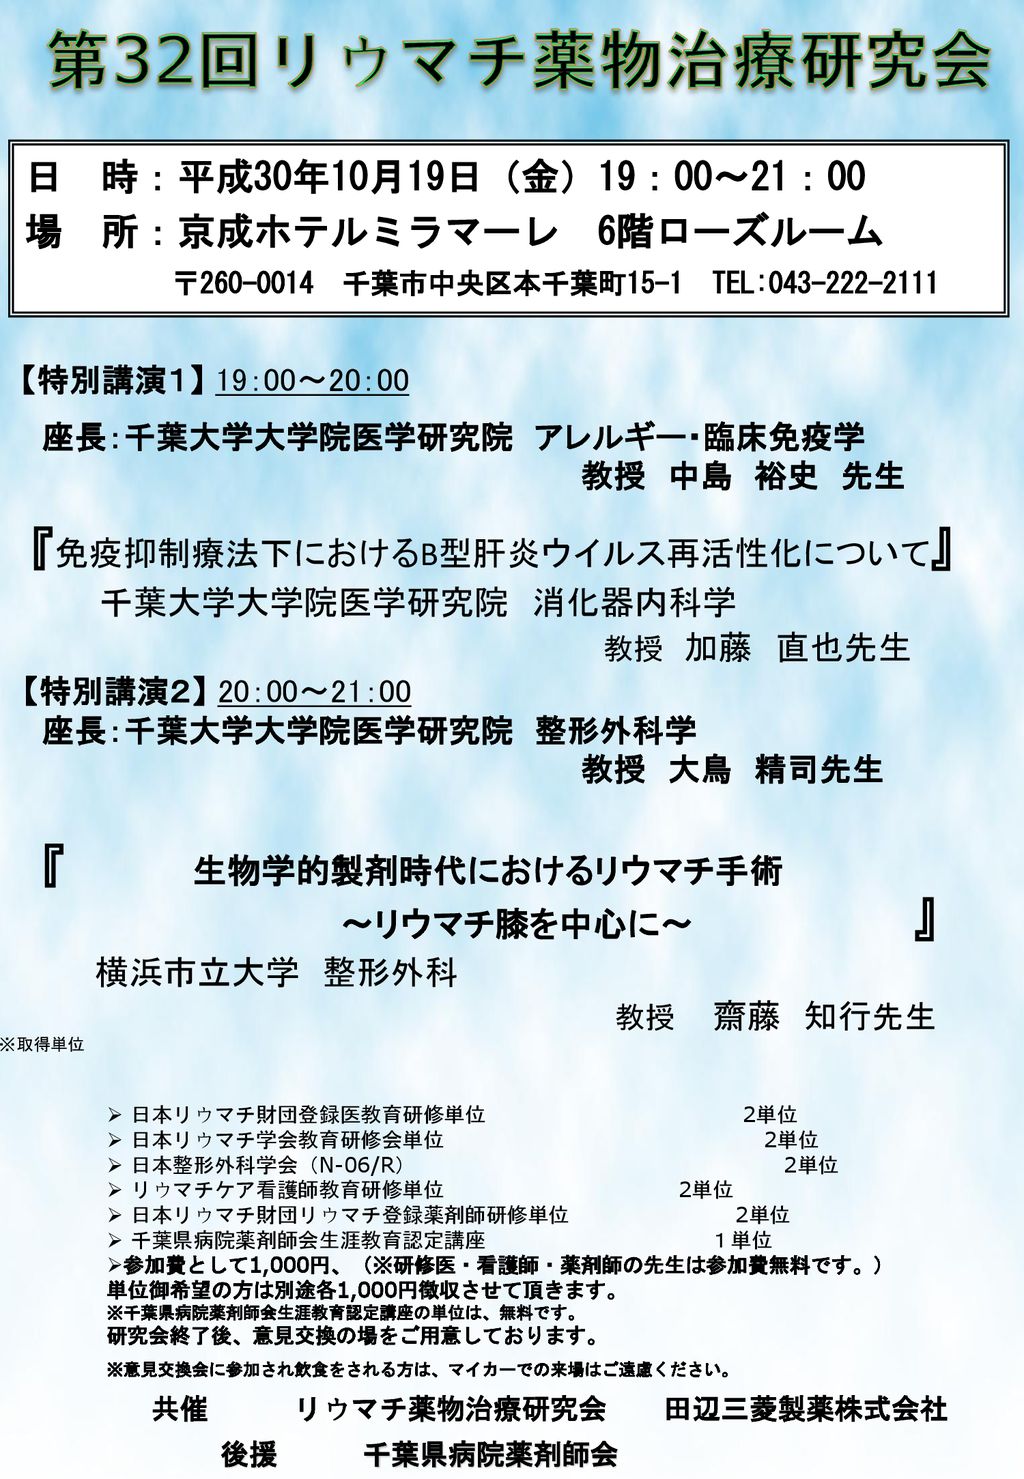 共催 リウマチ薬物治療研究会 田辺三菱製薬株式会社 Ppt Download